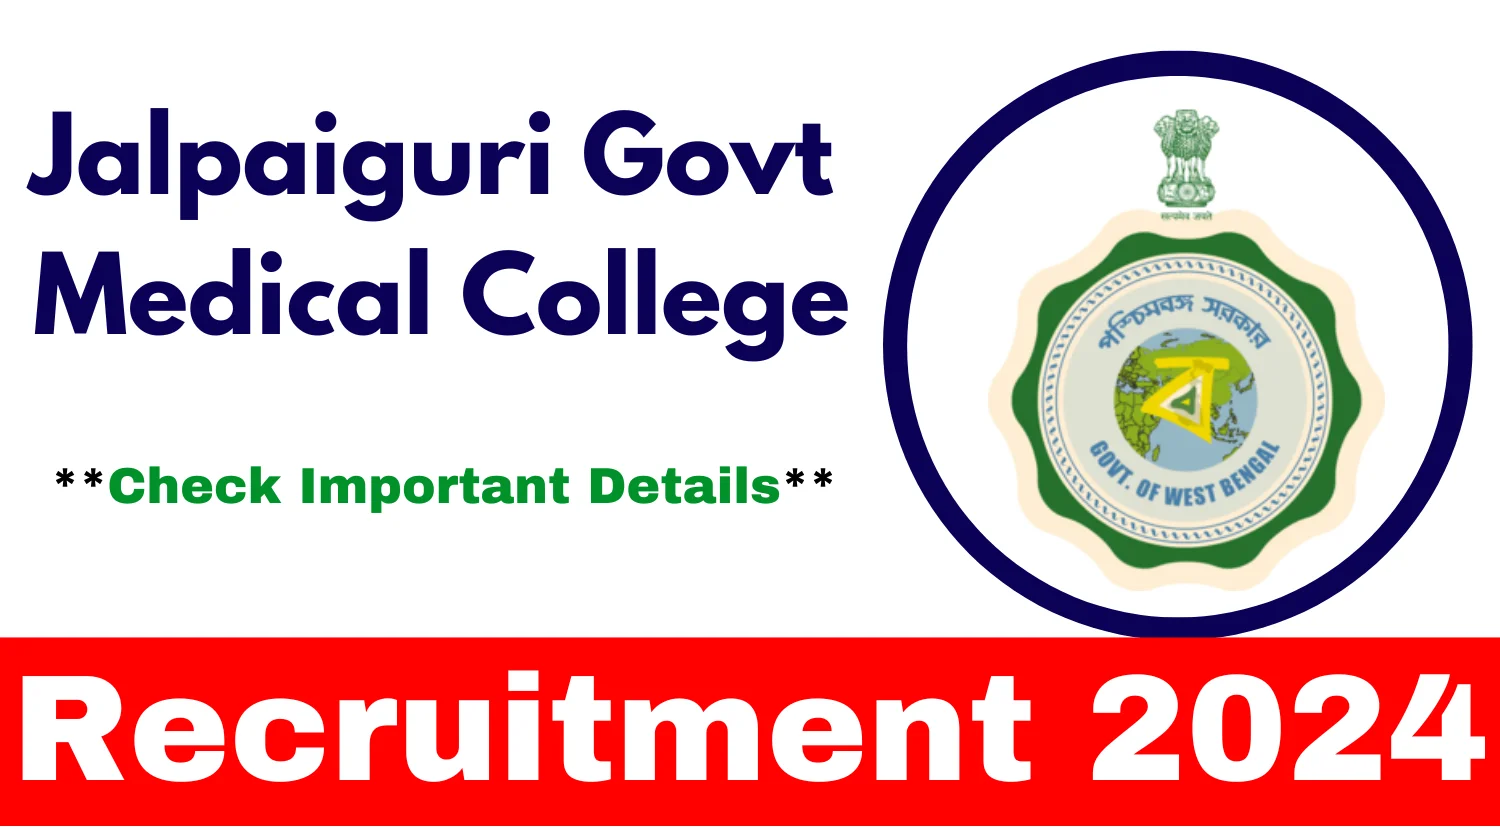 Jalpaiguri Govt Medical College Recruitment 2024 Notification Out for